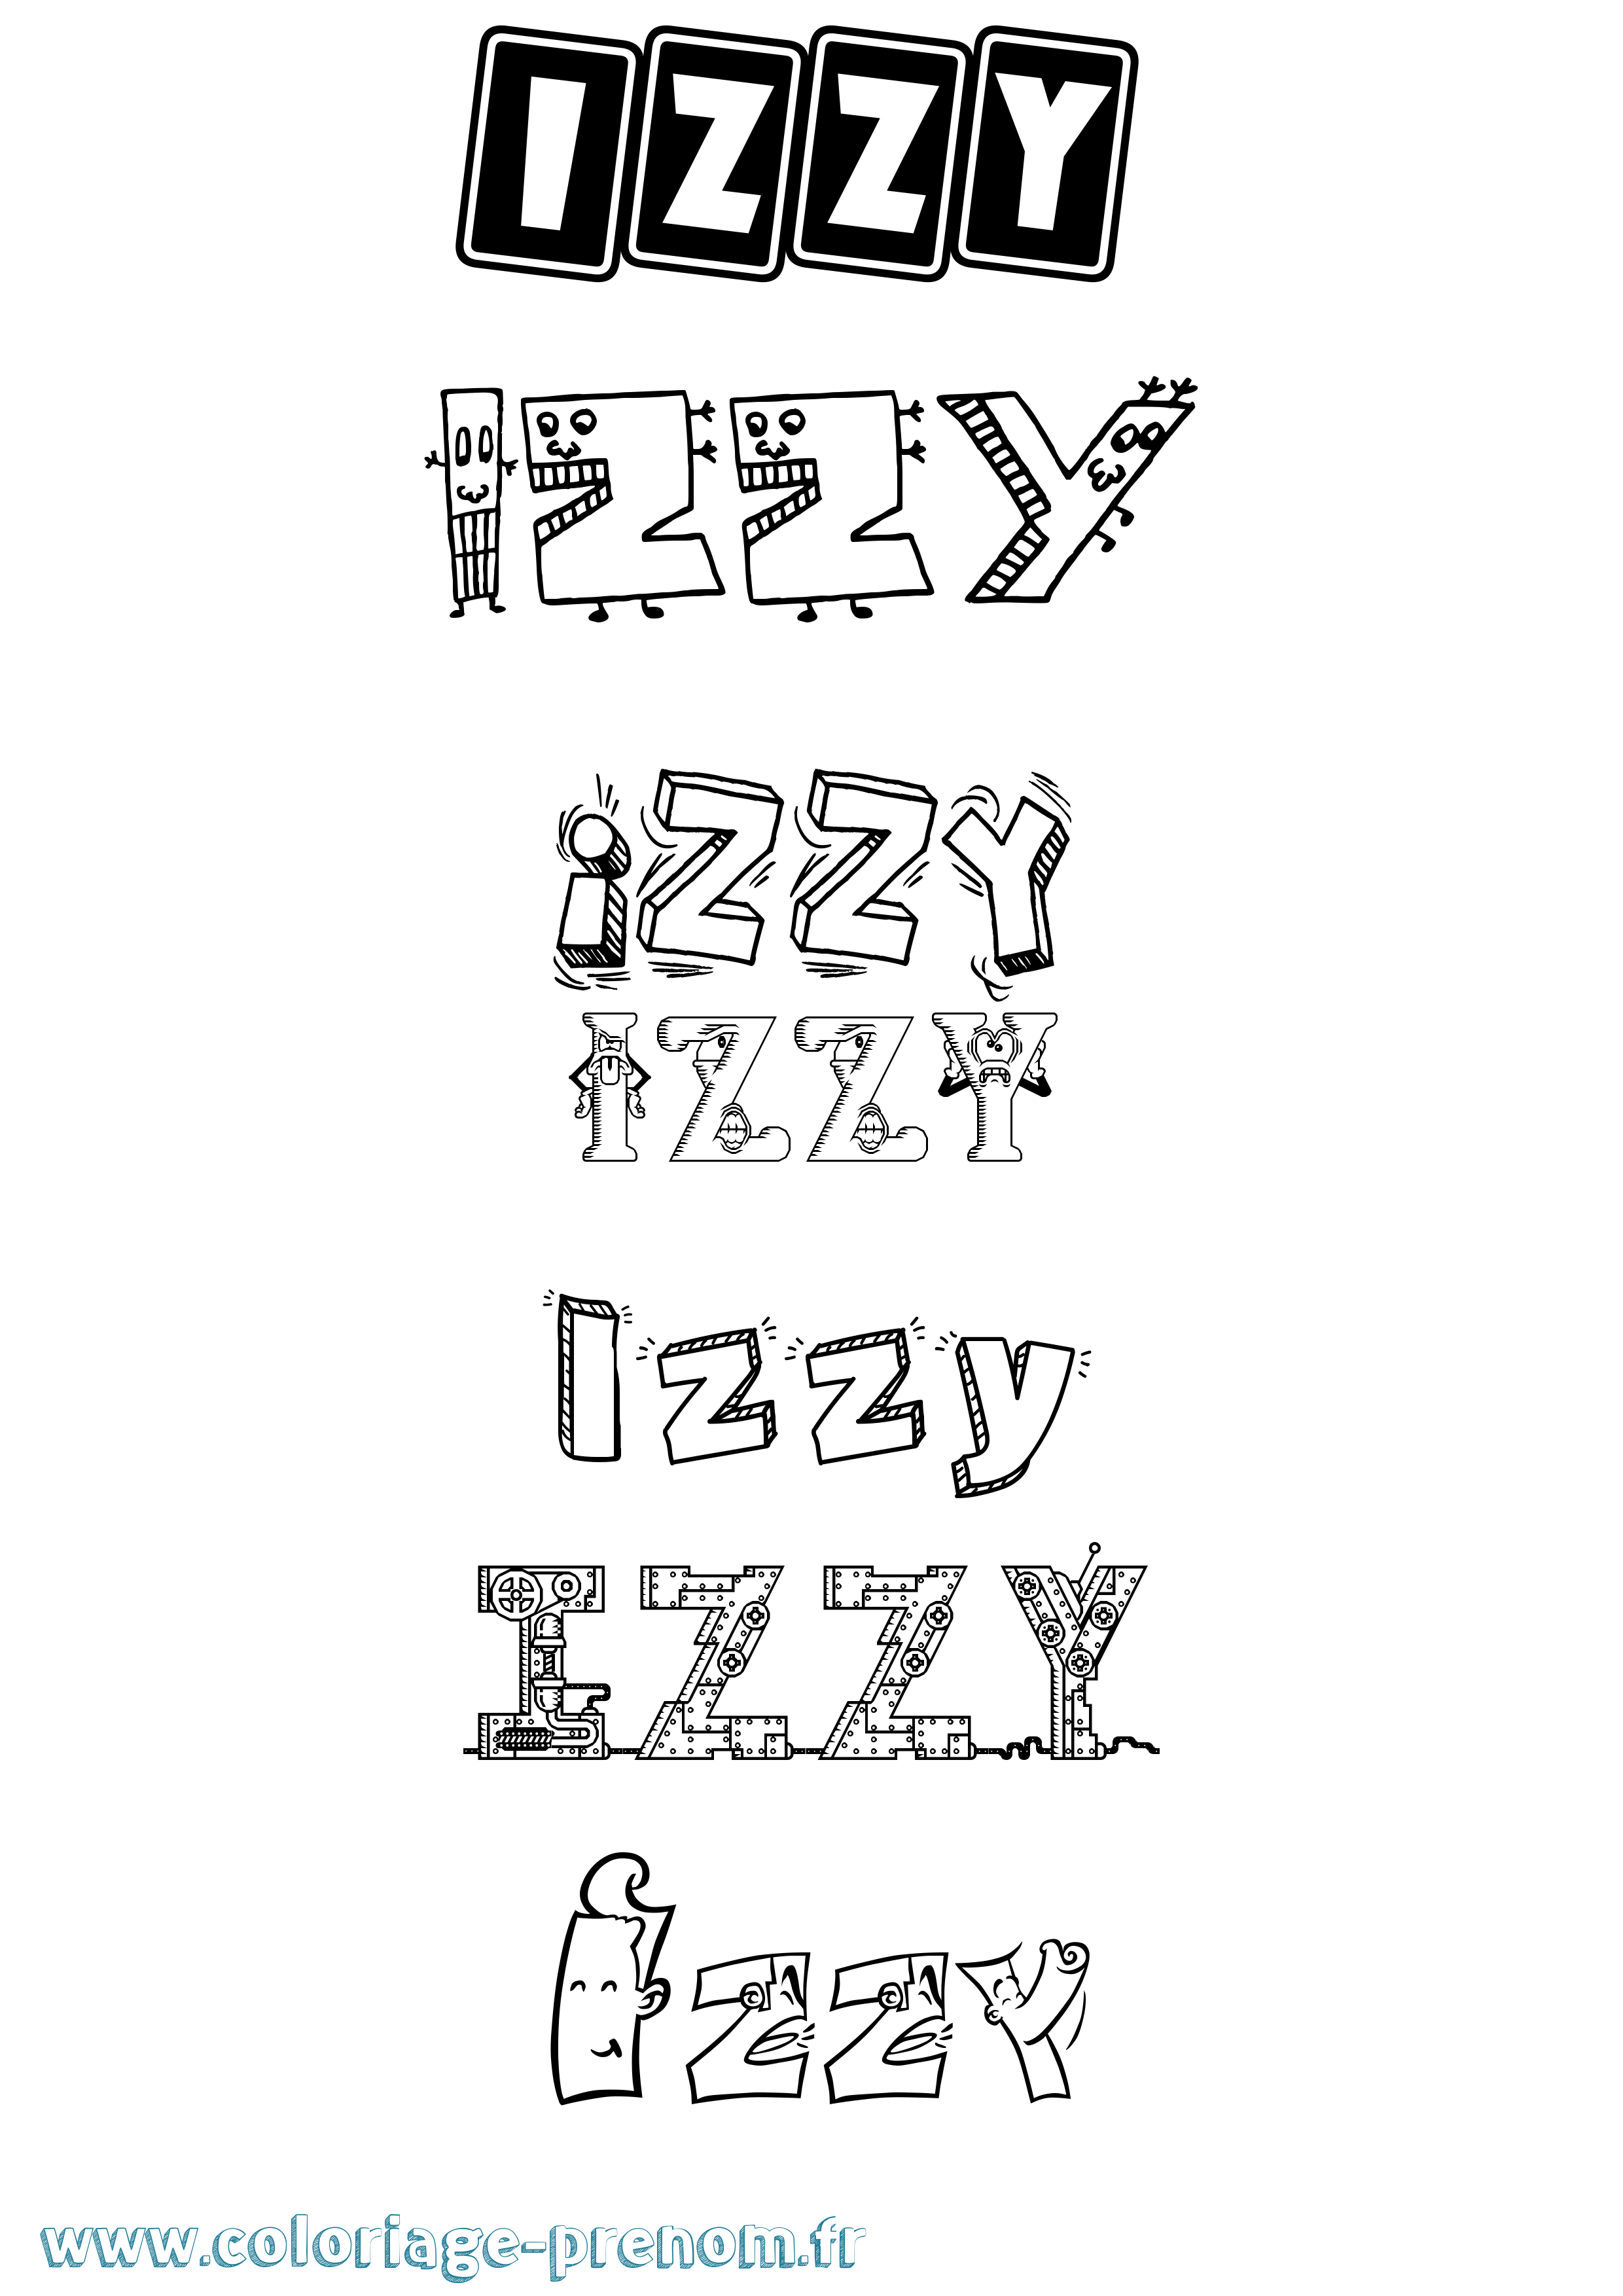 Coloriage prénom Izzy Fun